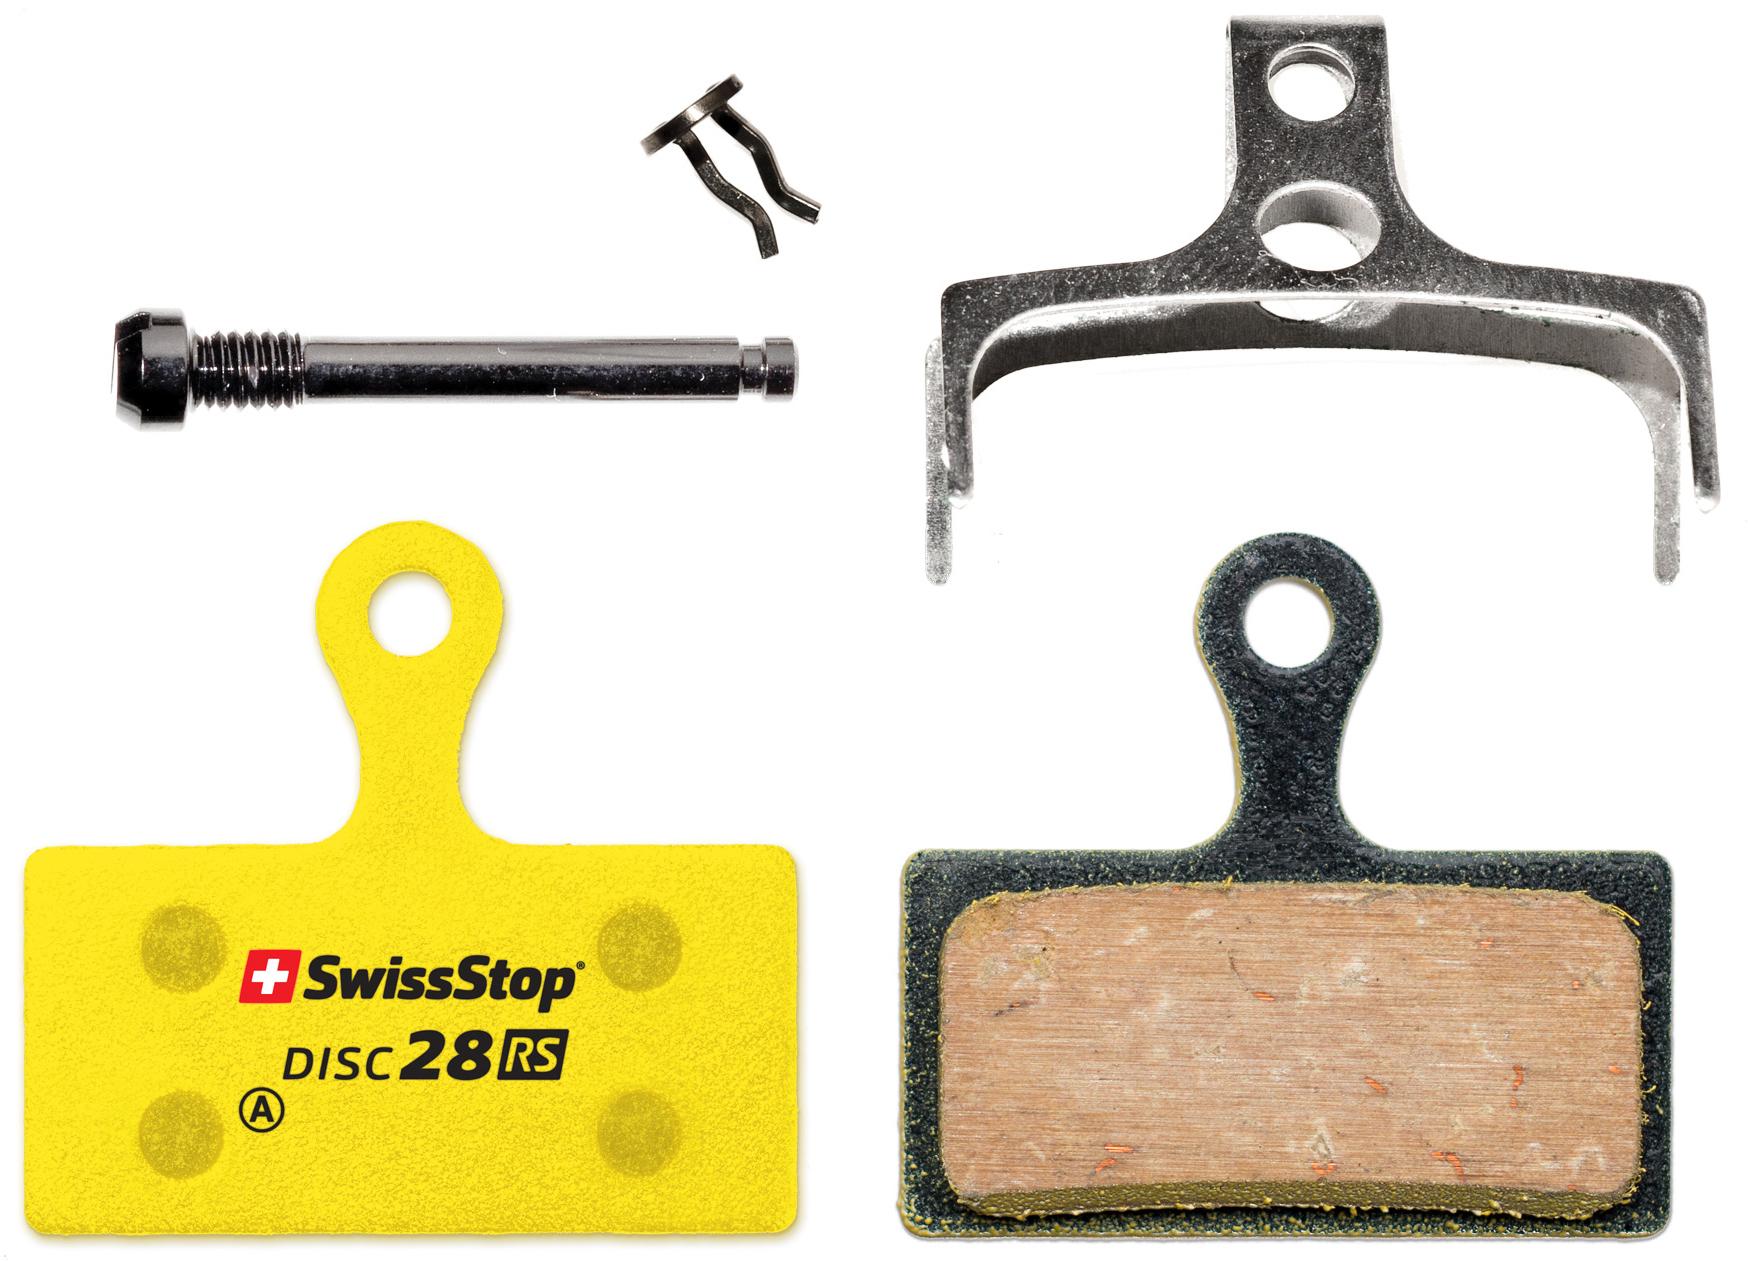 Swissstop Disc Rs Brake Pads - Yellow